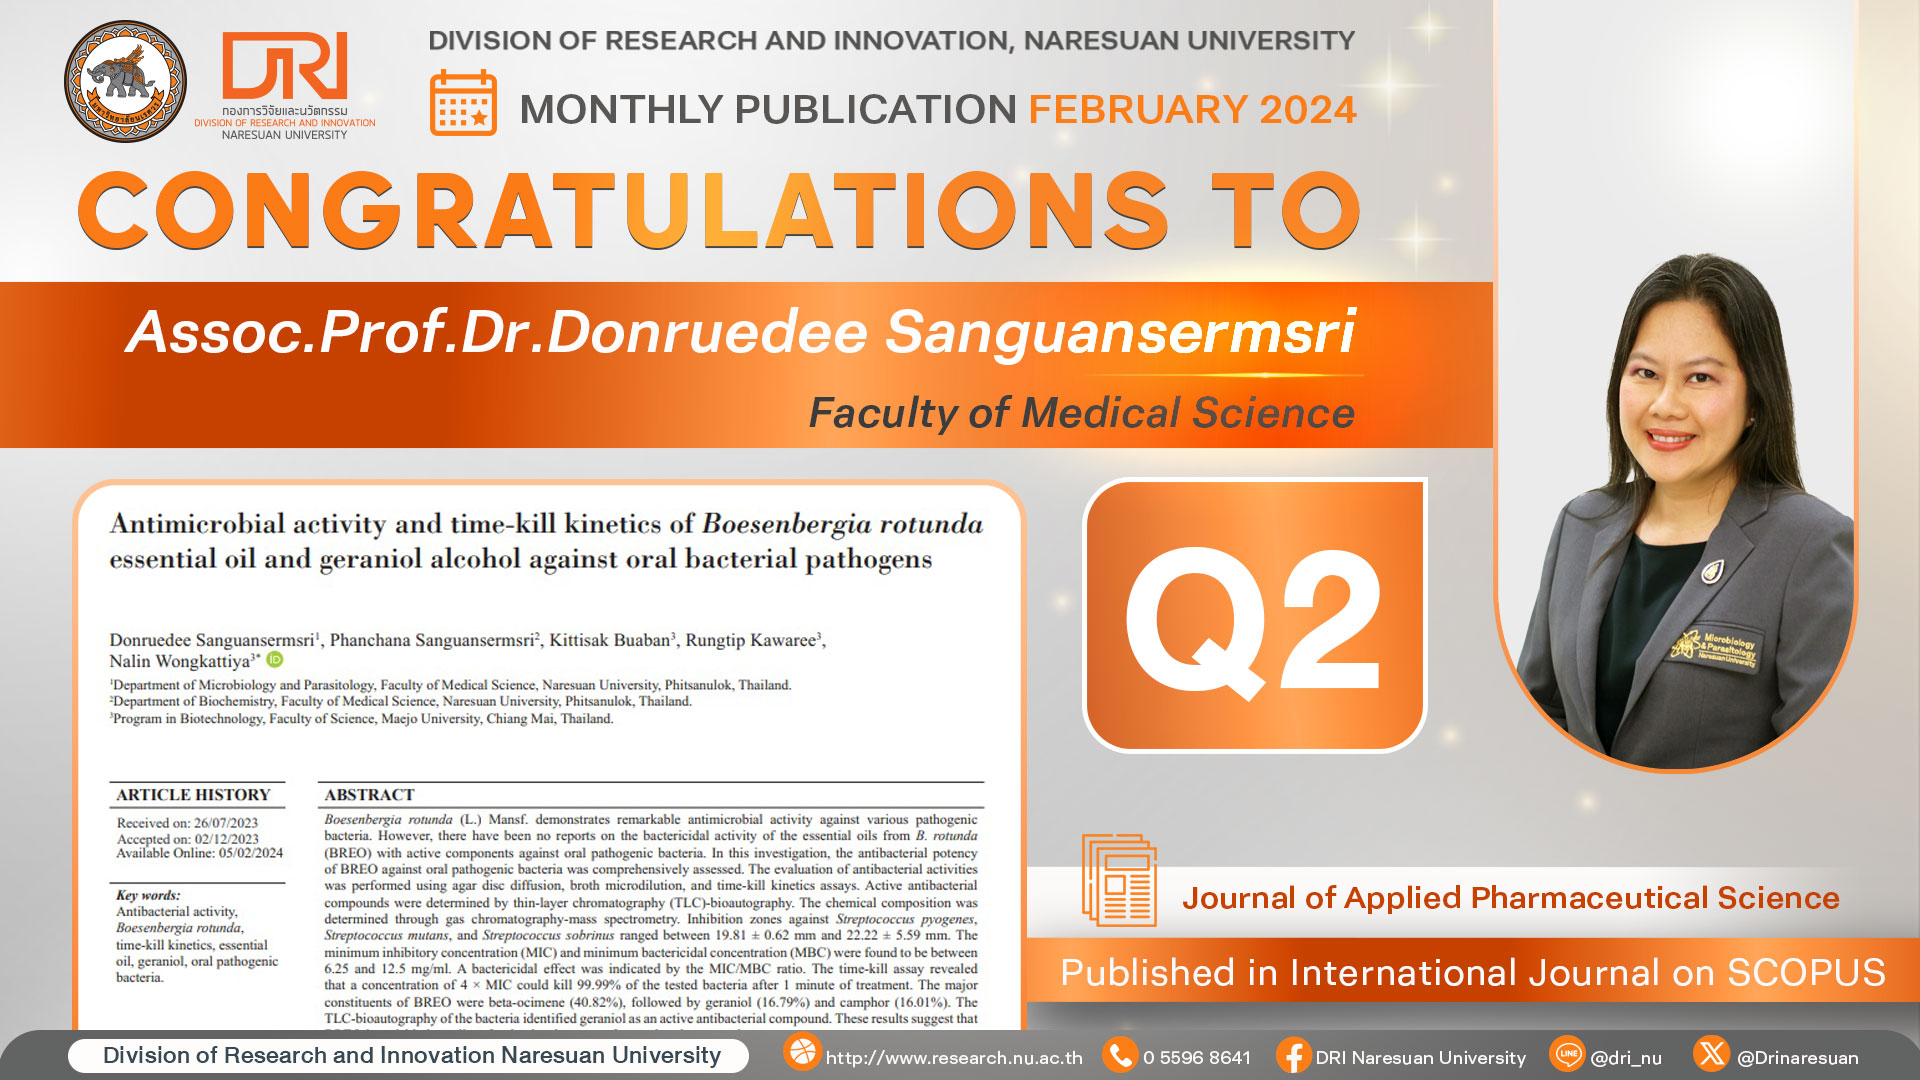 Congratulations to Assoc.Prof.Dr.Donruedee Sanguansermsri